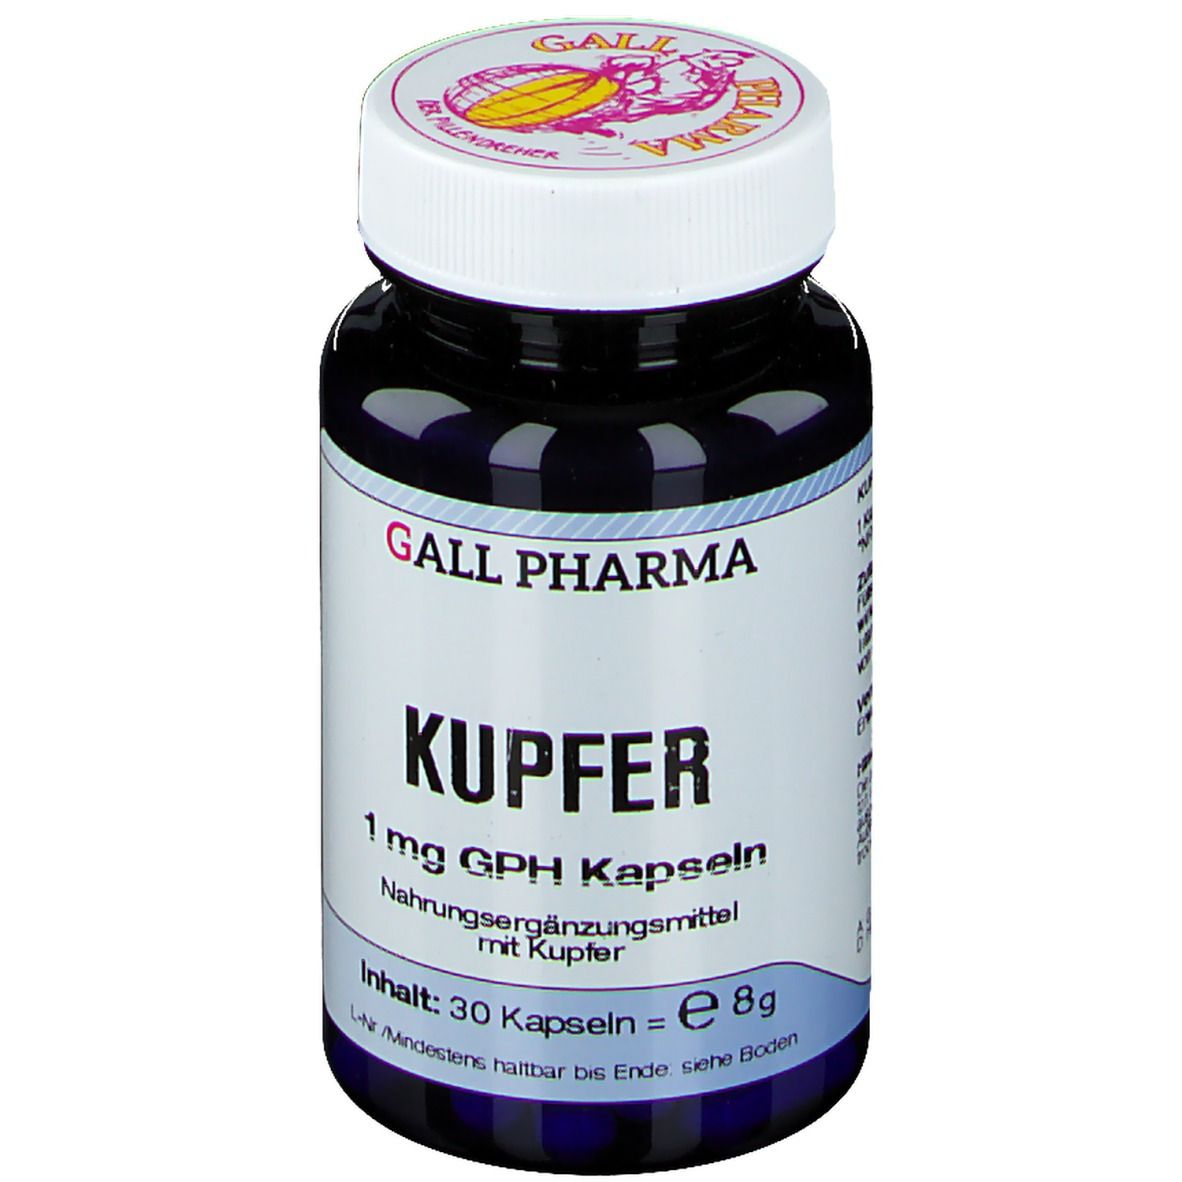 GALL PHARMA Kupfer 1 mg GPH